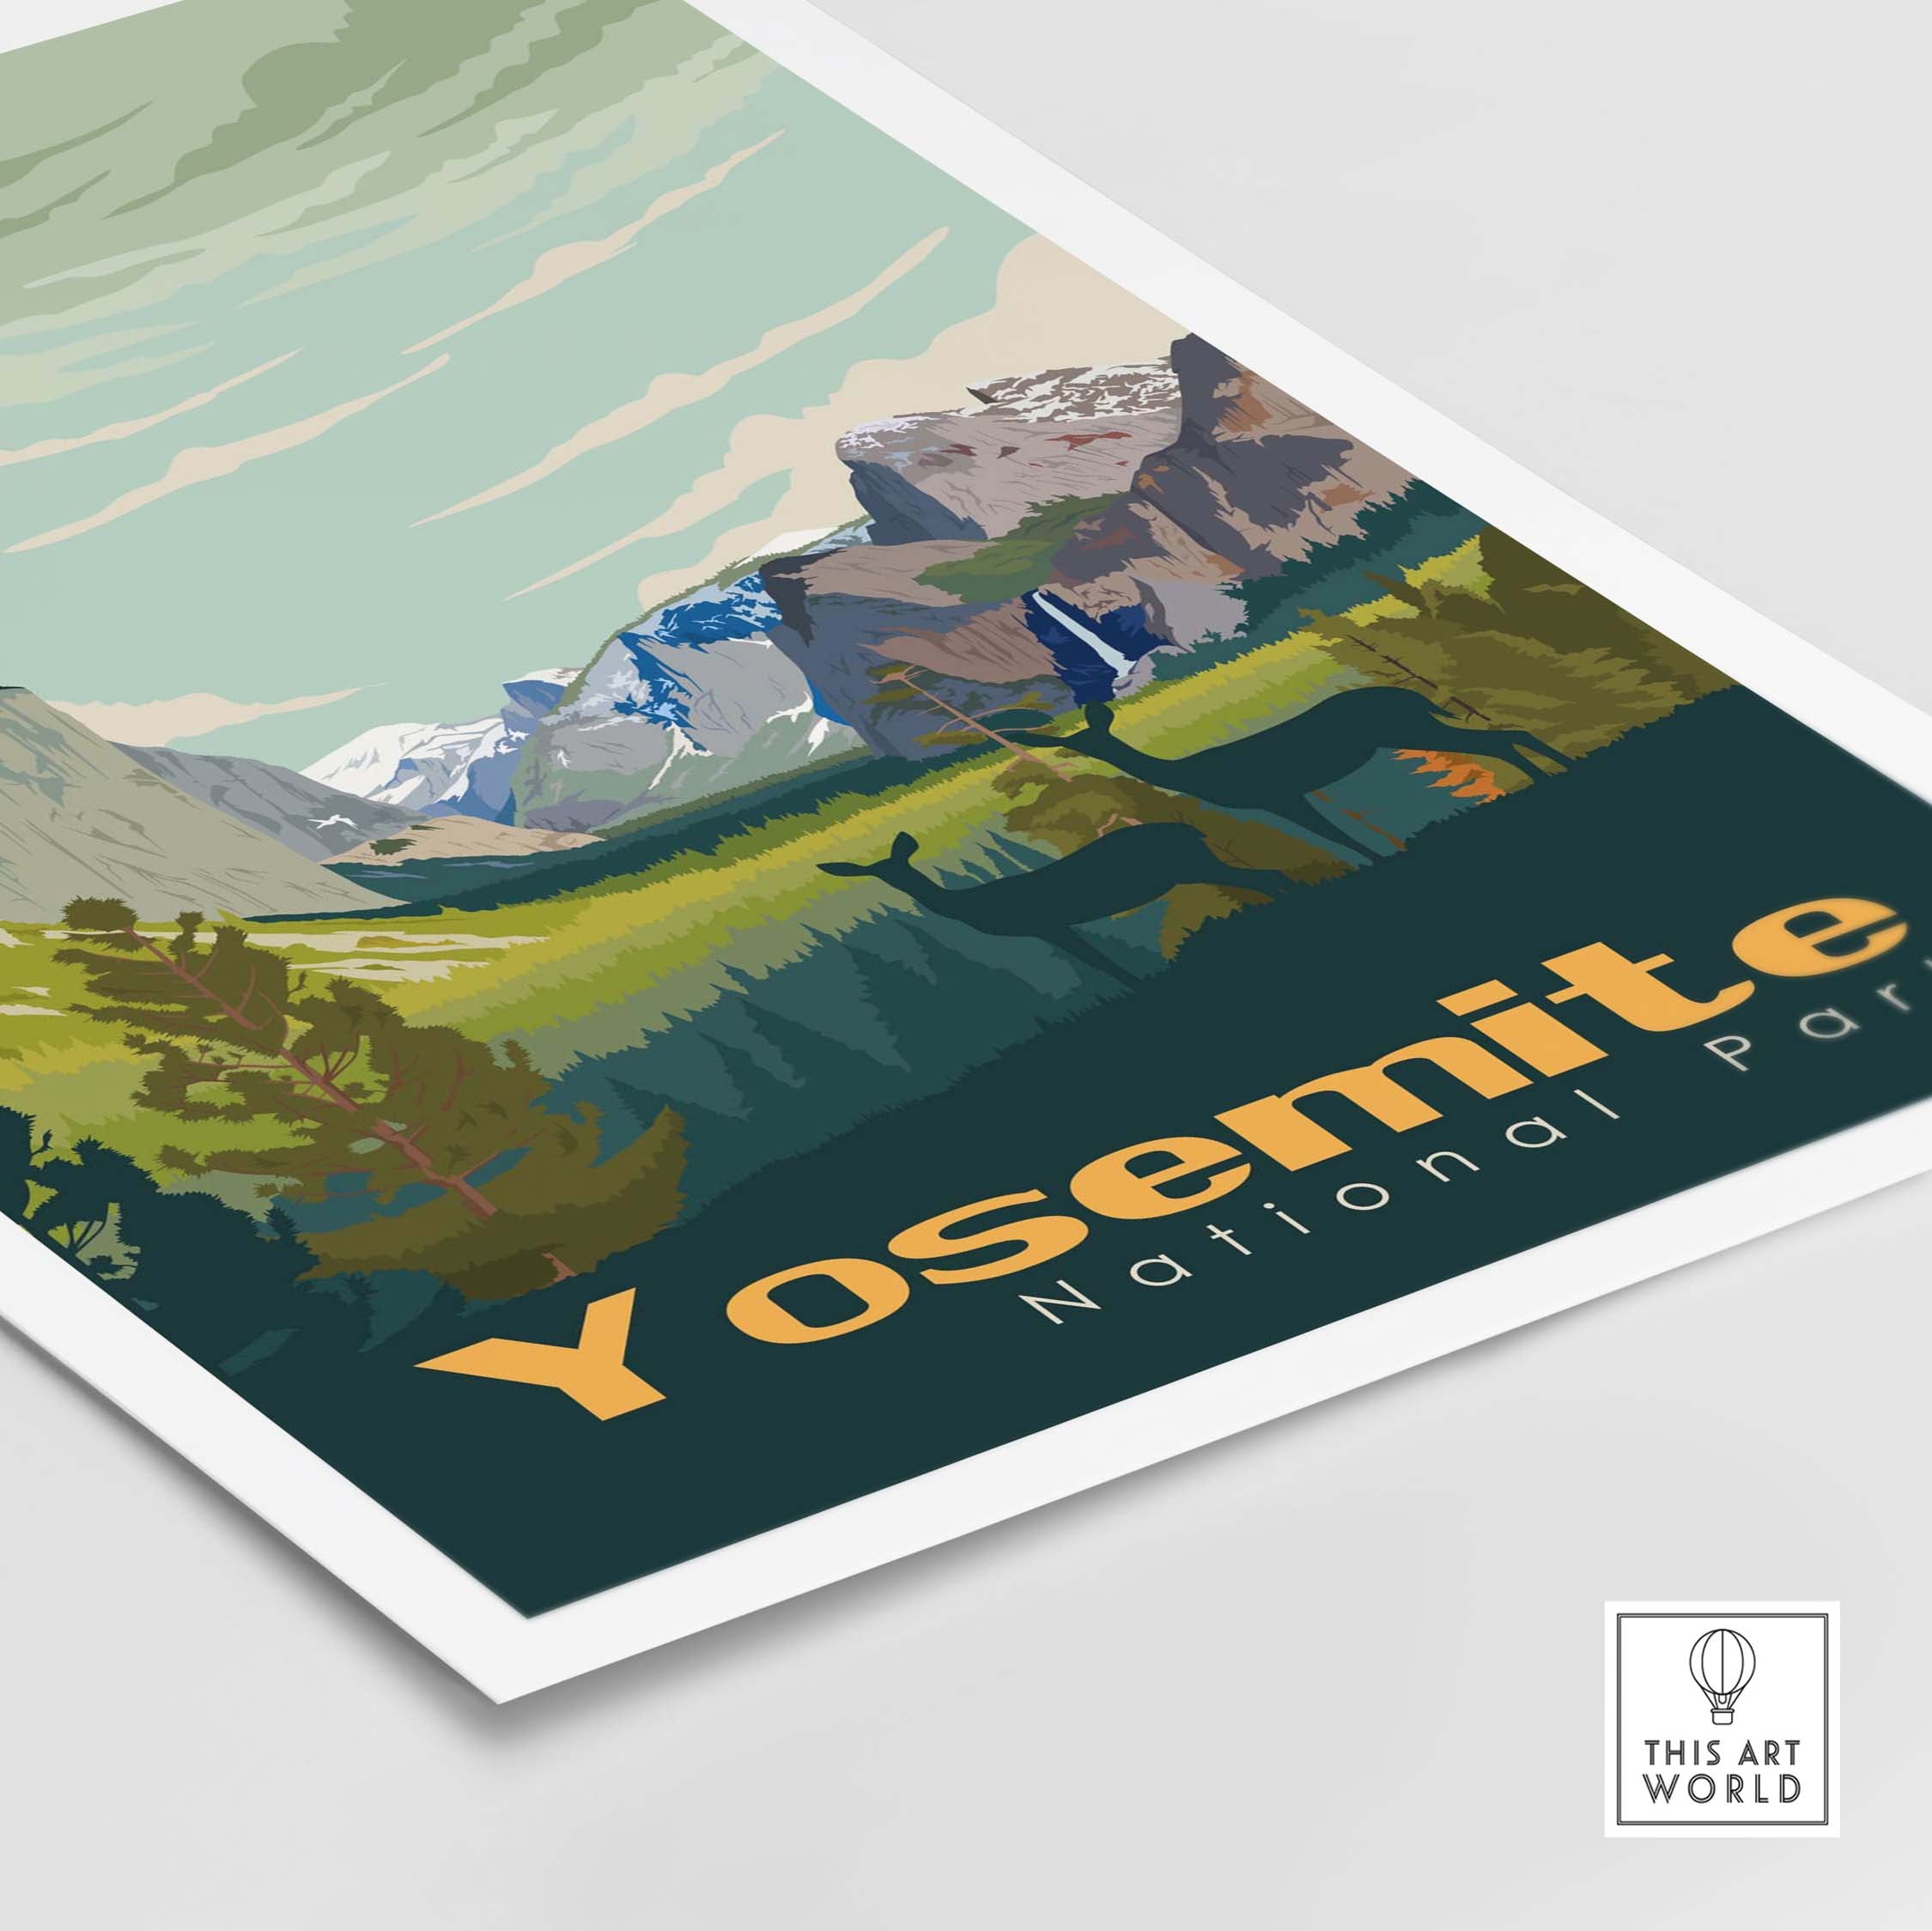 yosemite national park poster